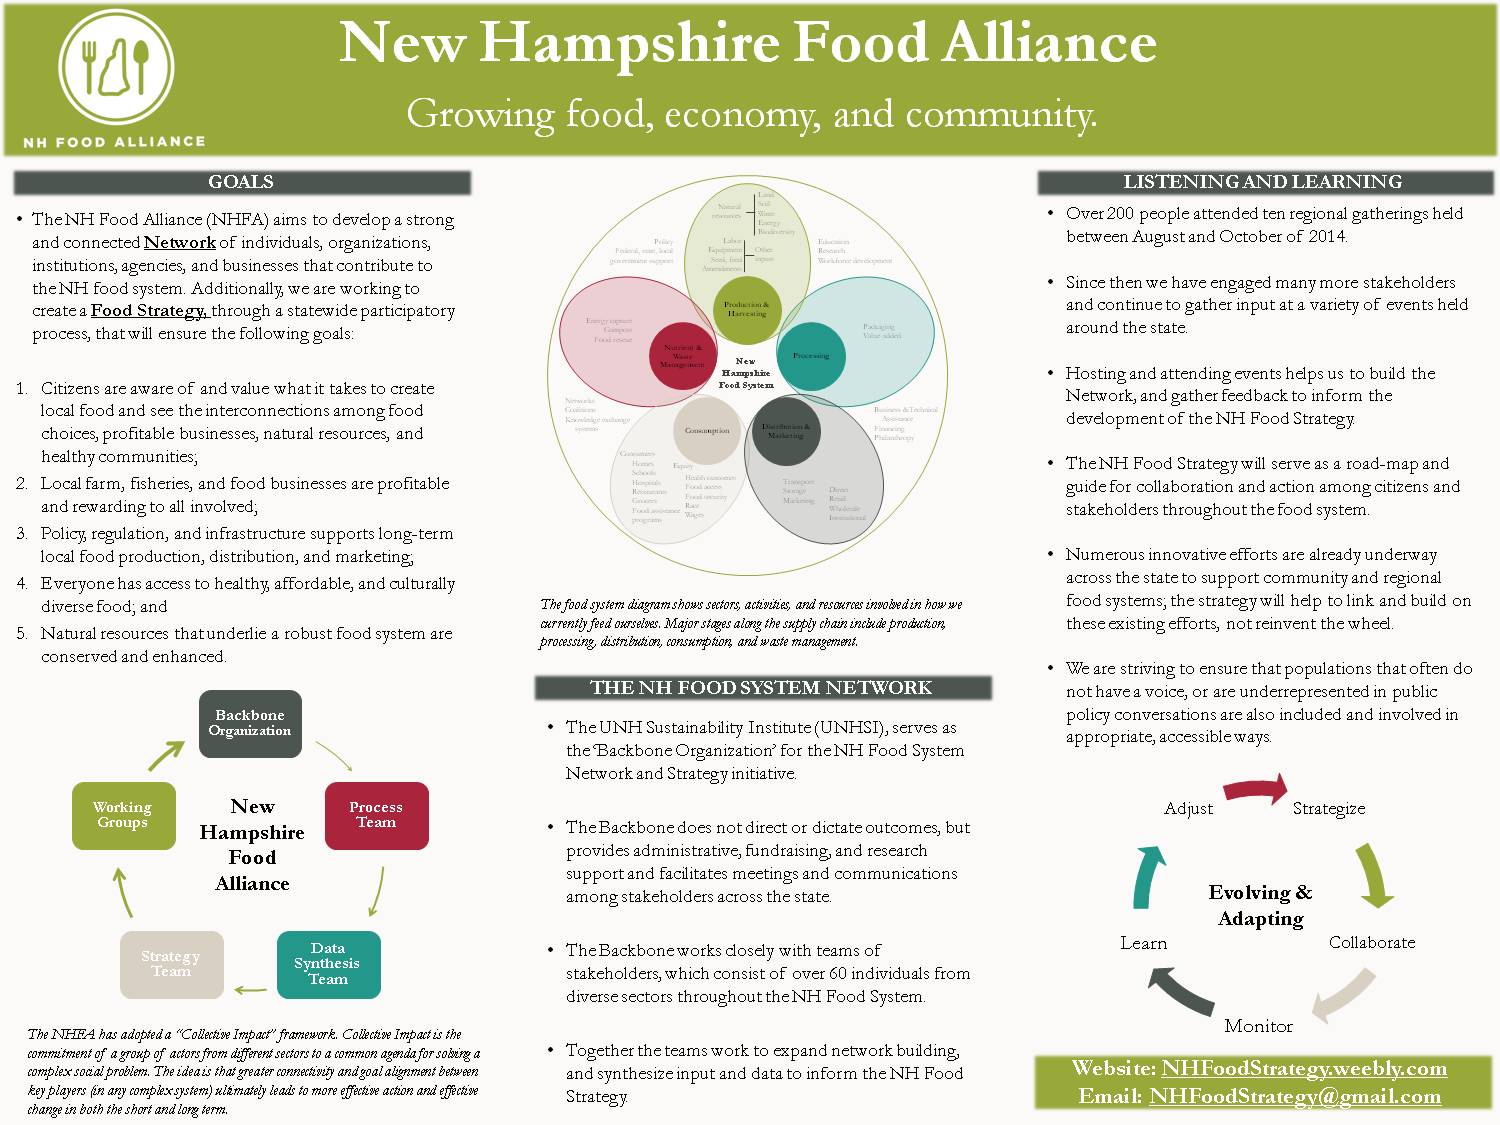 New Hampshire Food Alliance by jwilhelm